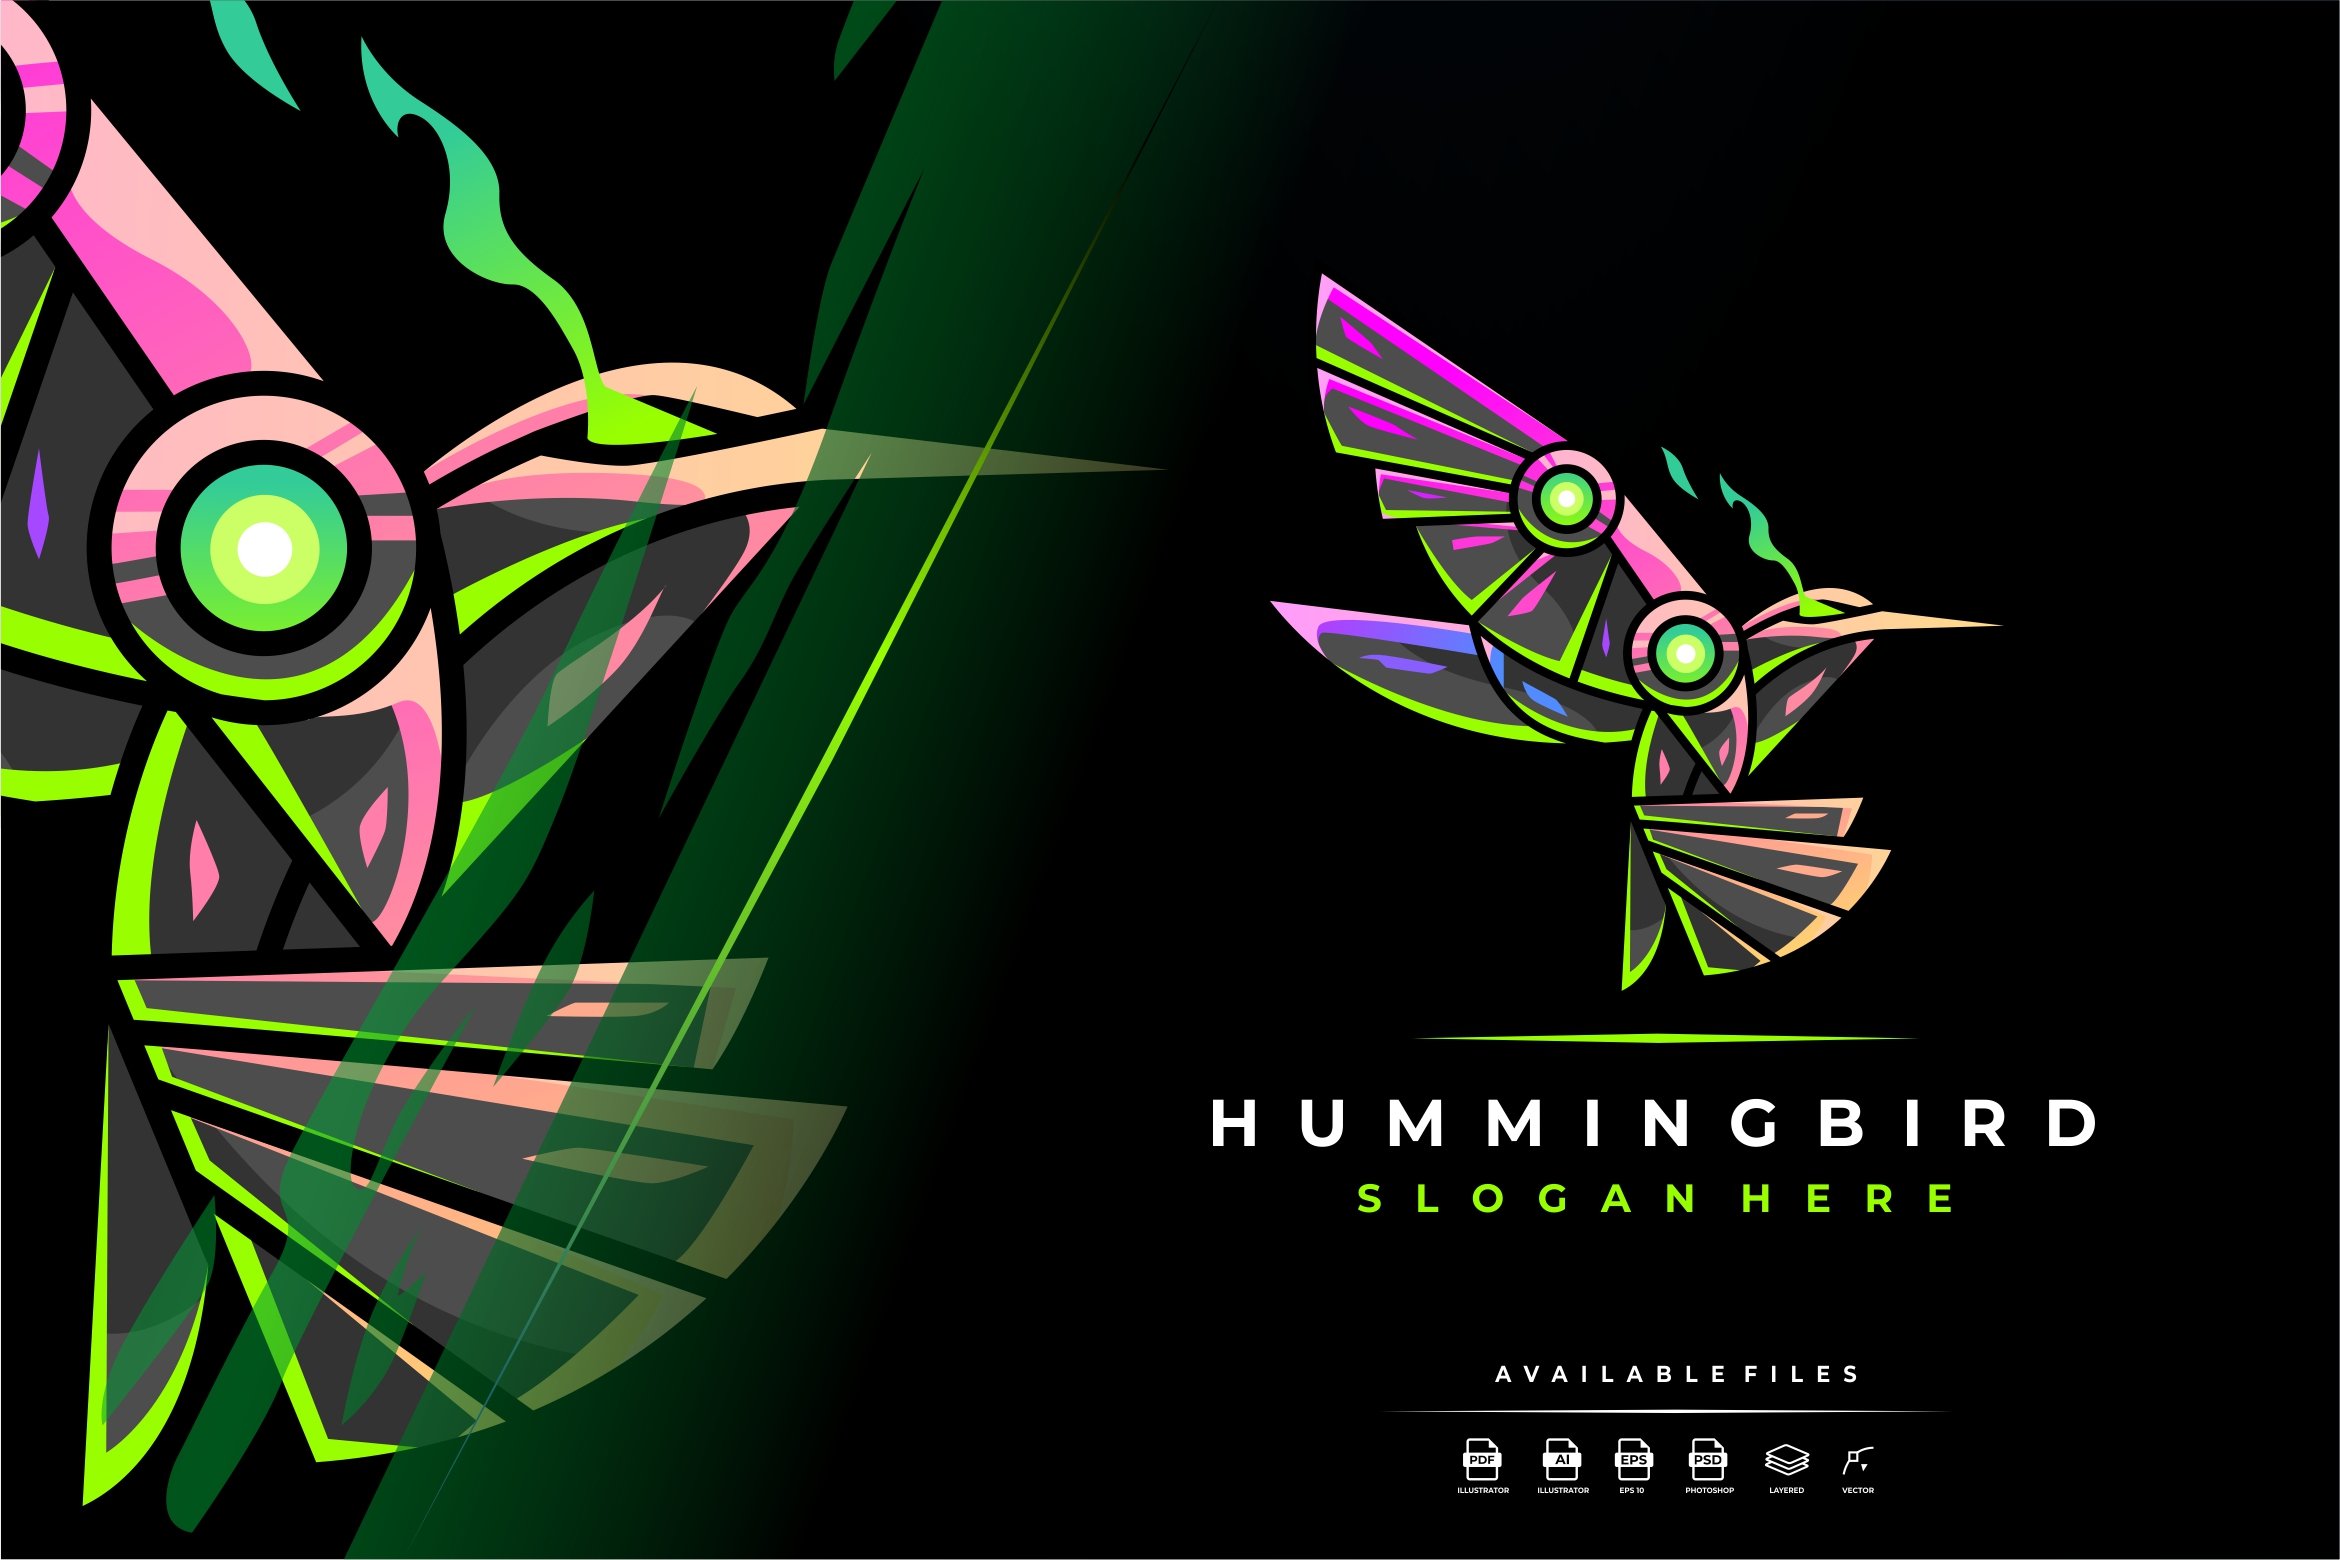 Robotic Hummingbird Mascot Logo cover image.